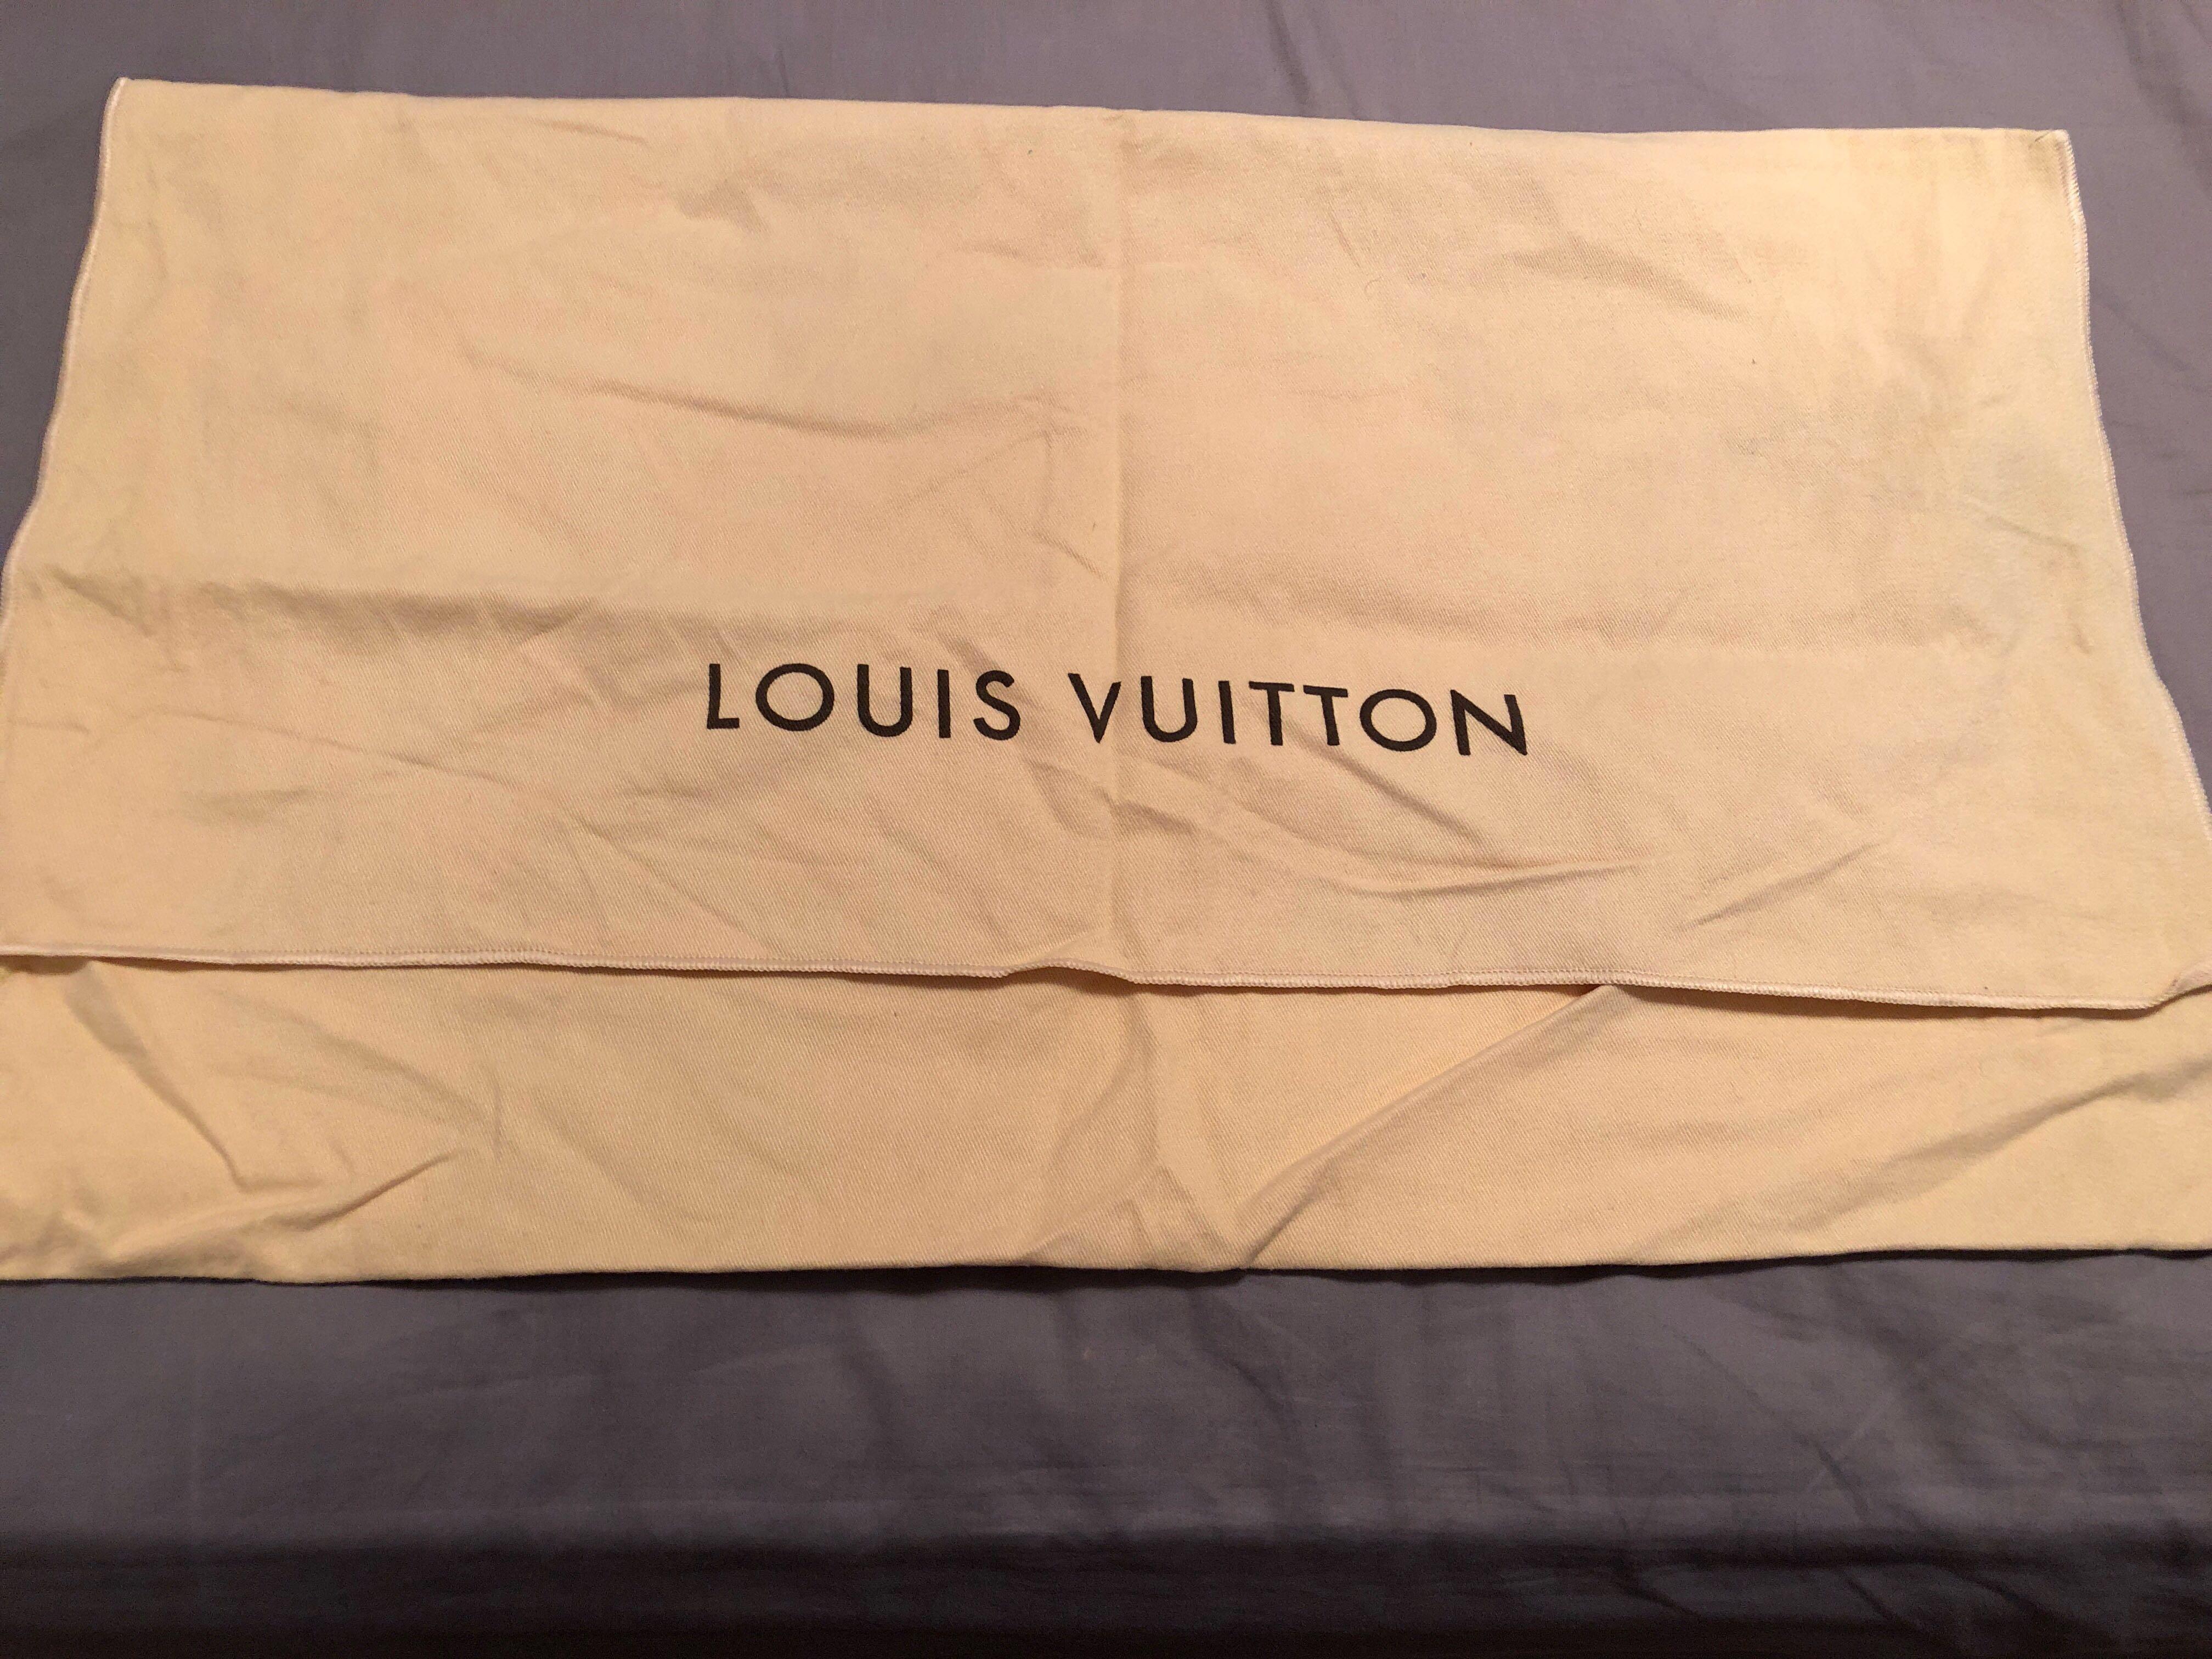 Louis Vuitton Louis Vuitton Dust bag for Large Bags  String type